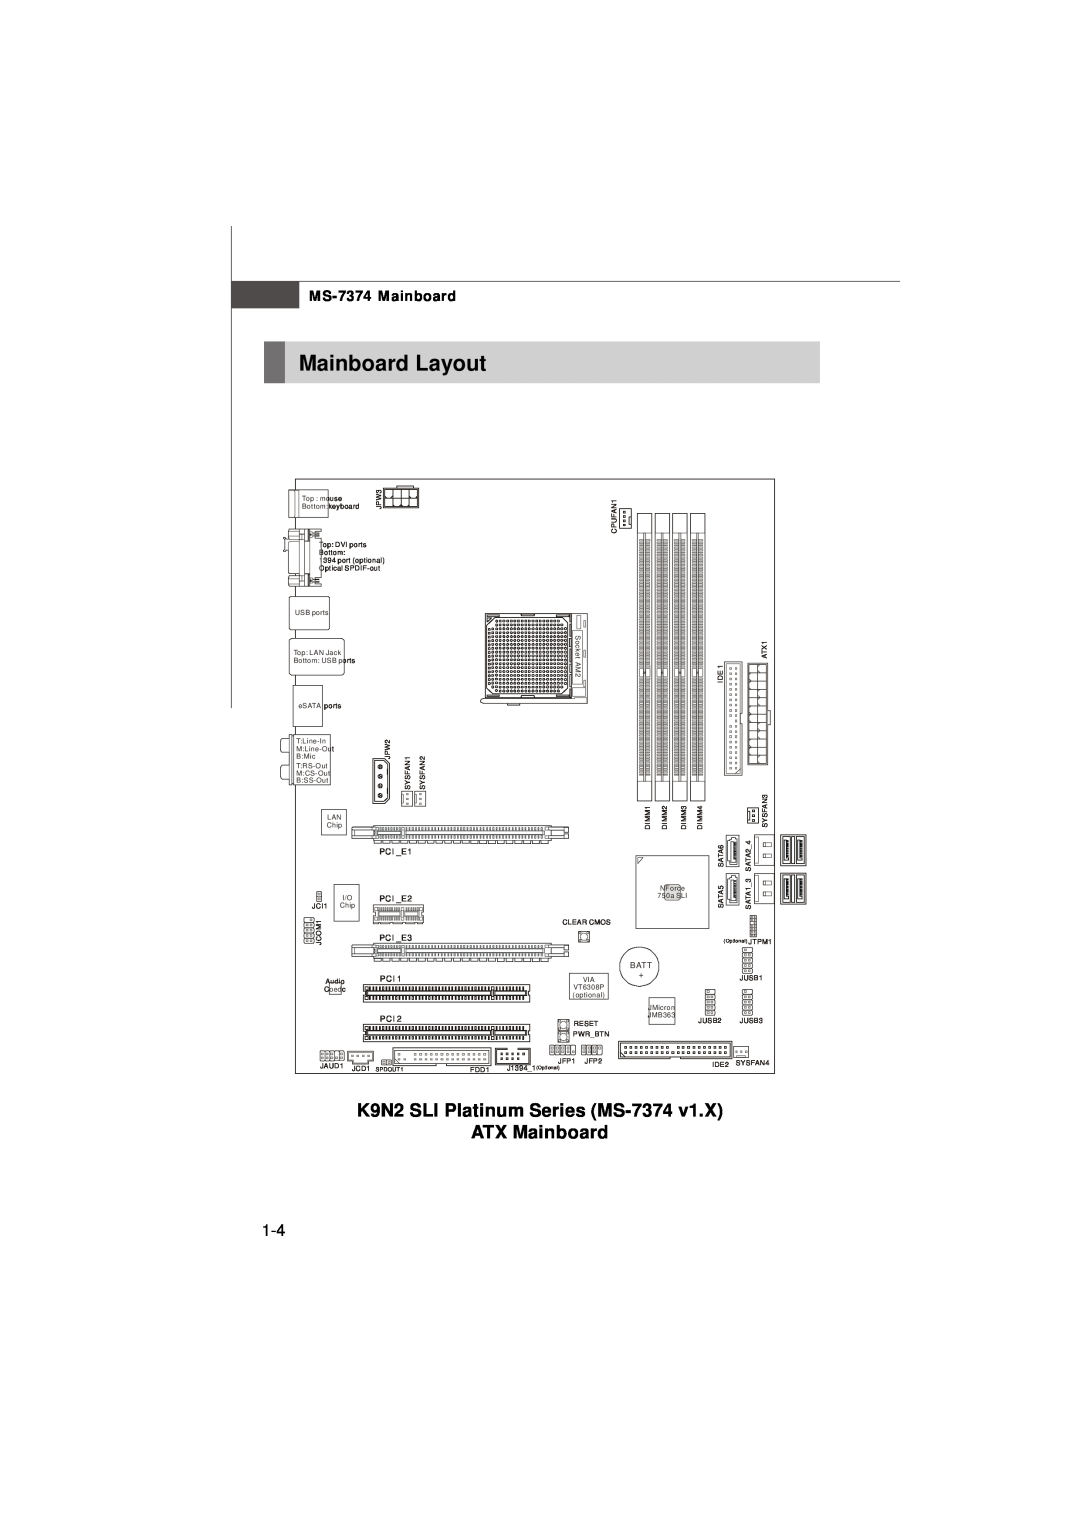 Nvidia Mainboard Layout, K9N2 SLI Platinum Series MS-7374 ATX Mainboard, MS-7374 Mainboard, PCI E1, PCI E2, PCI E3 